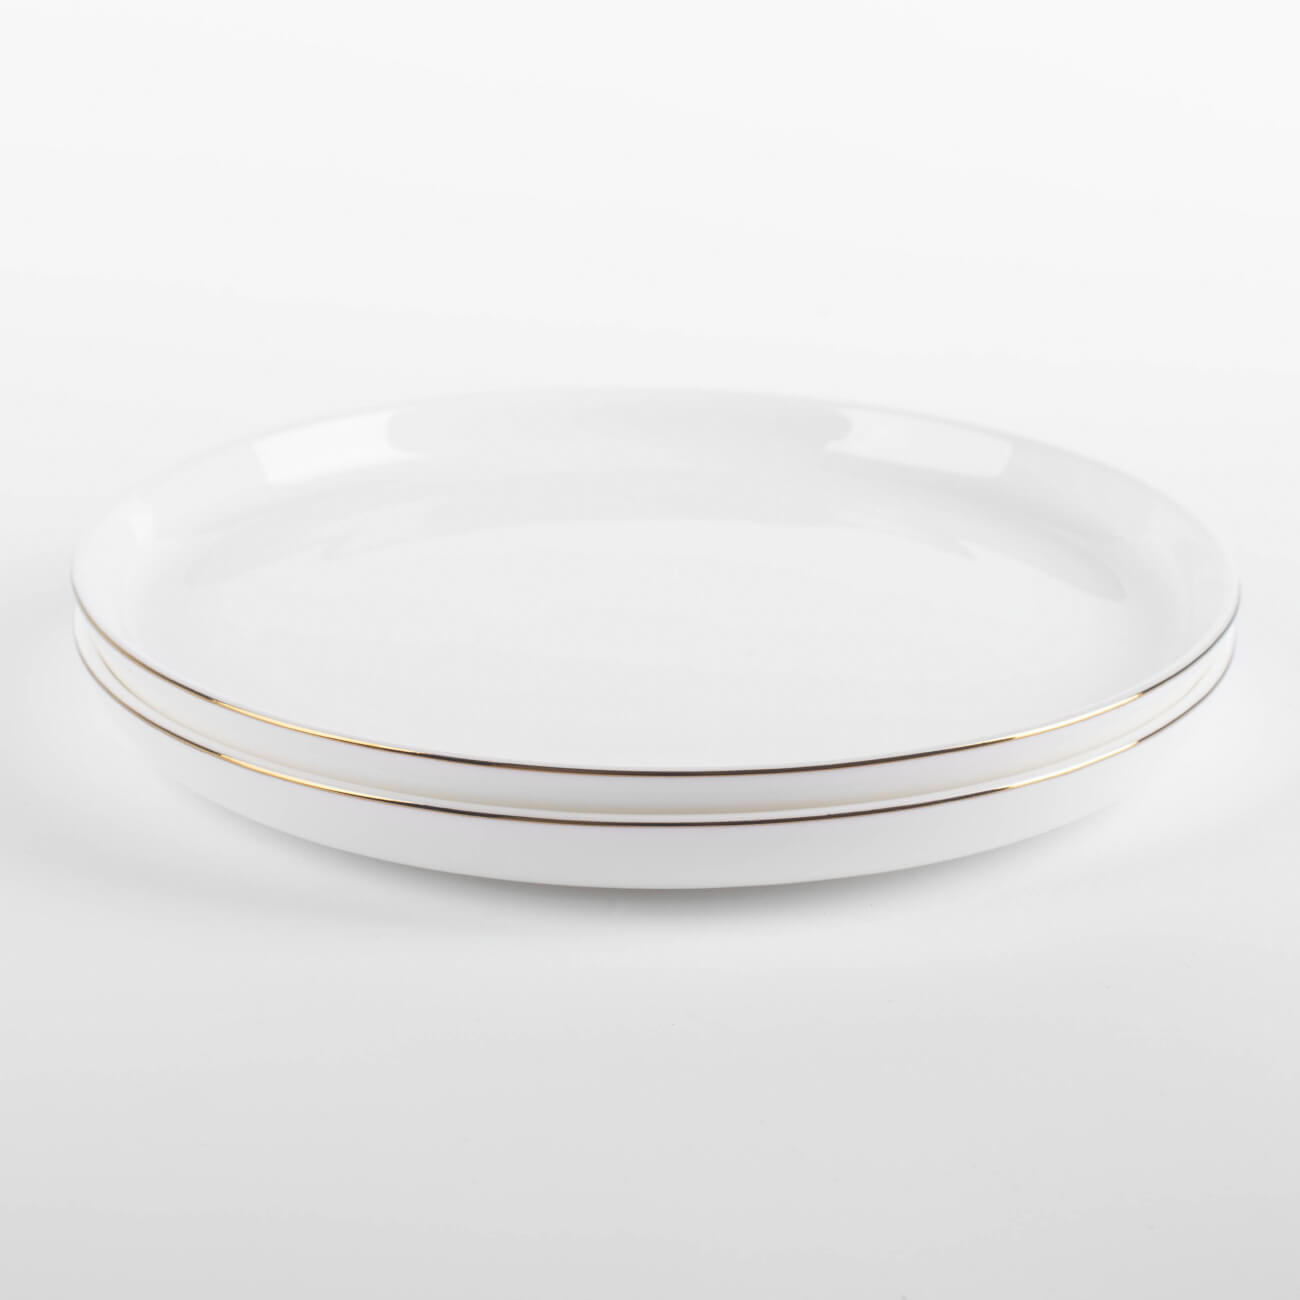 Тарелка десертная, 20 см, 2 шт, фарфор F, белая, Ideal gold тарелка десертная porcel ethereal moka